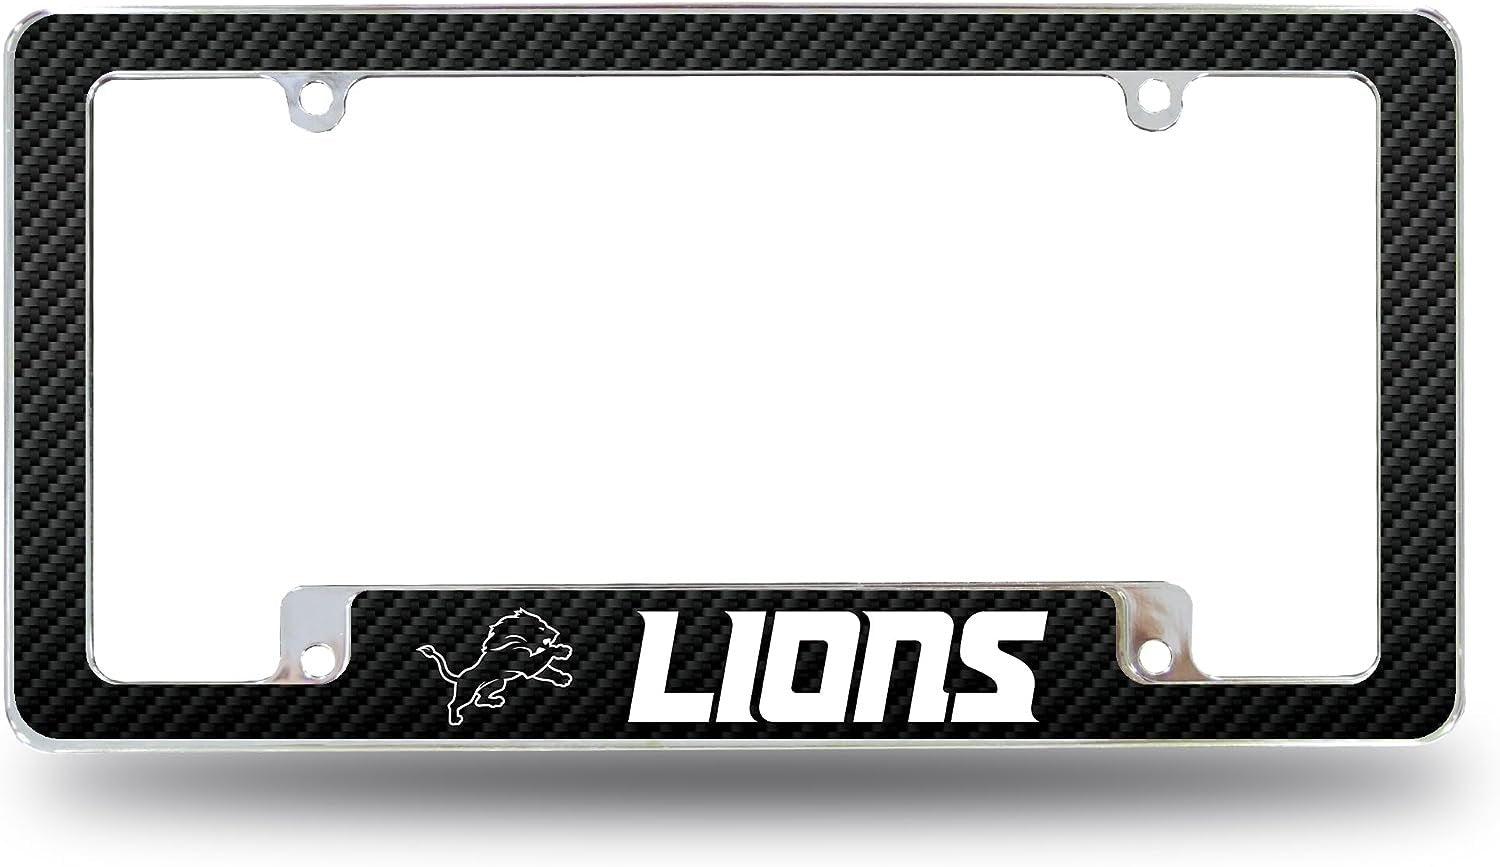 Detroit Lions Metal License Plate Frame Chrome Tag Cover Carbon Fiber Design 6x12 Inch